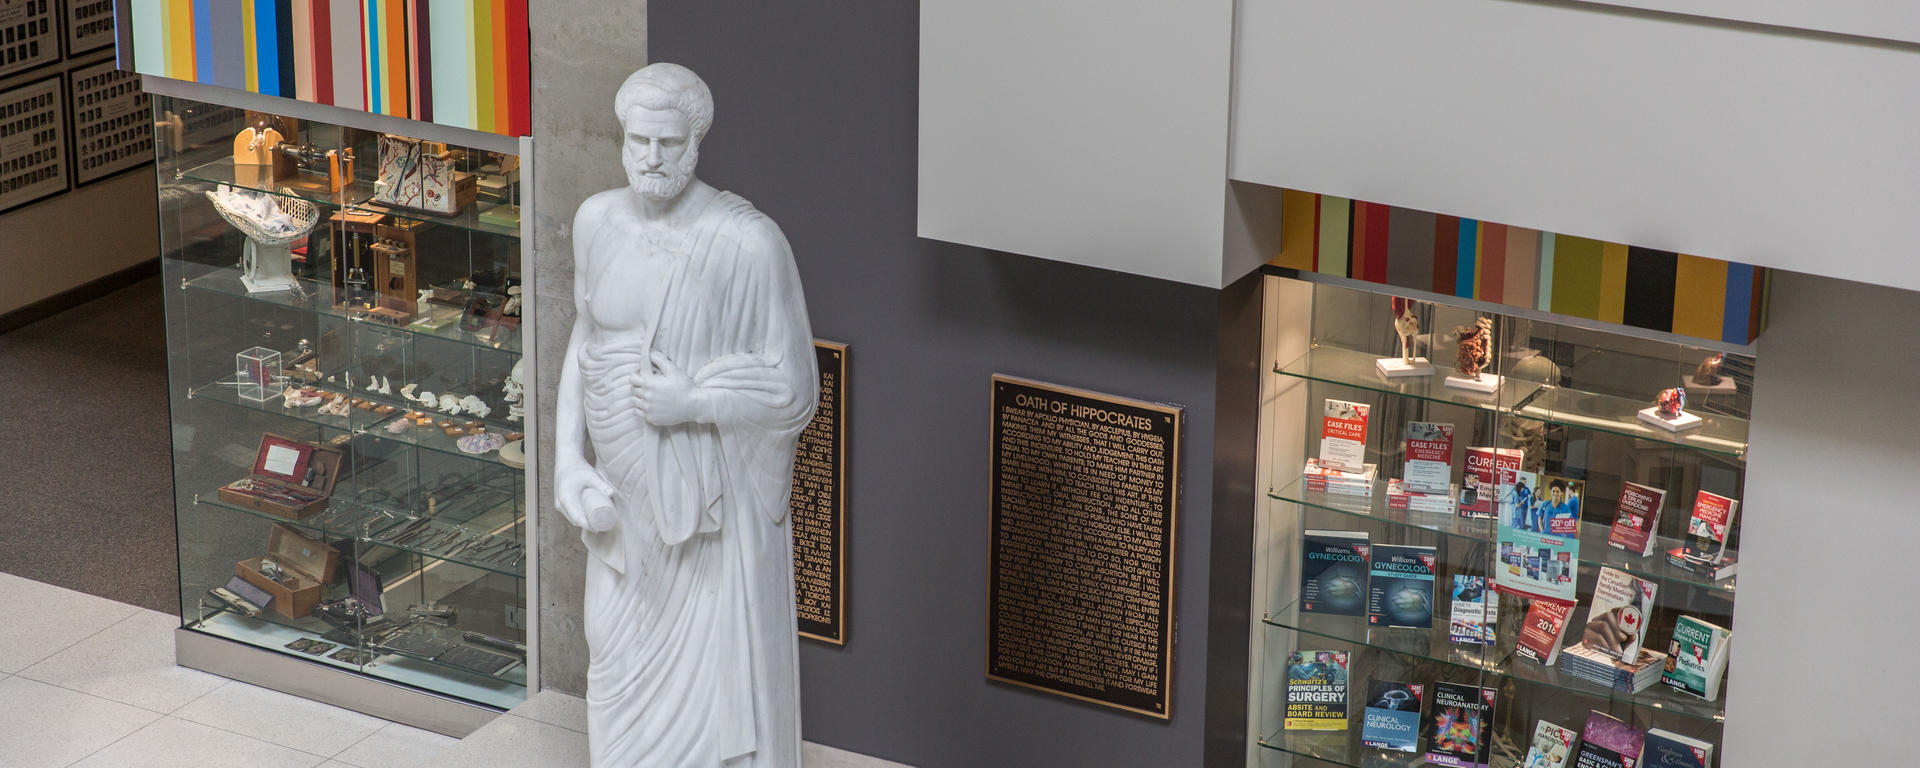 Hippocrates statue and bookstore at Cumming School of Medicine 